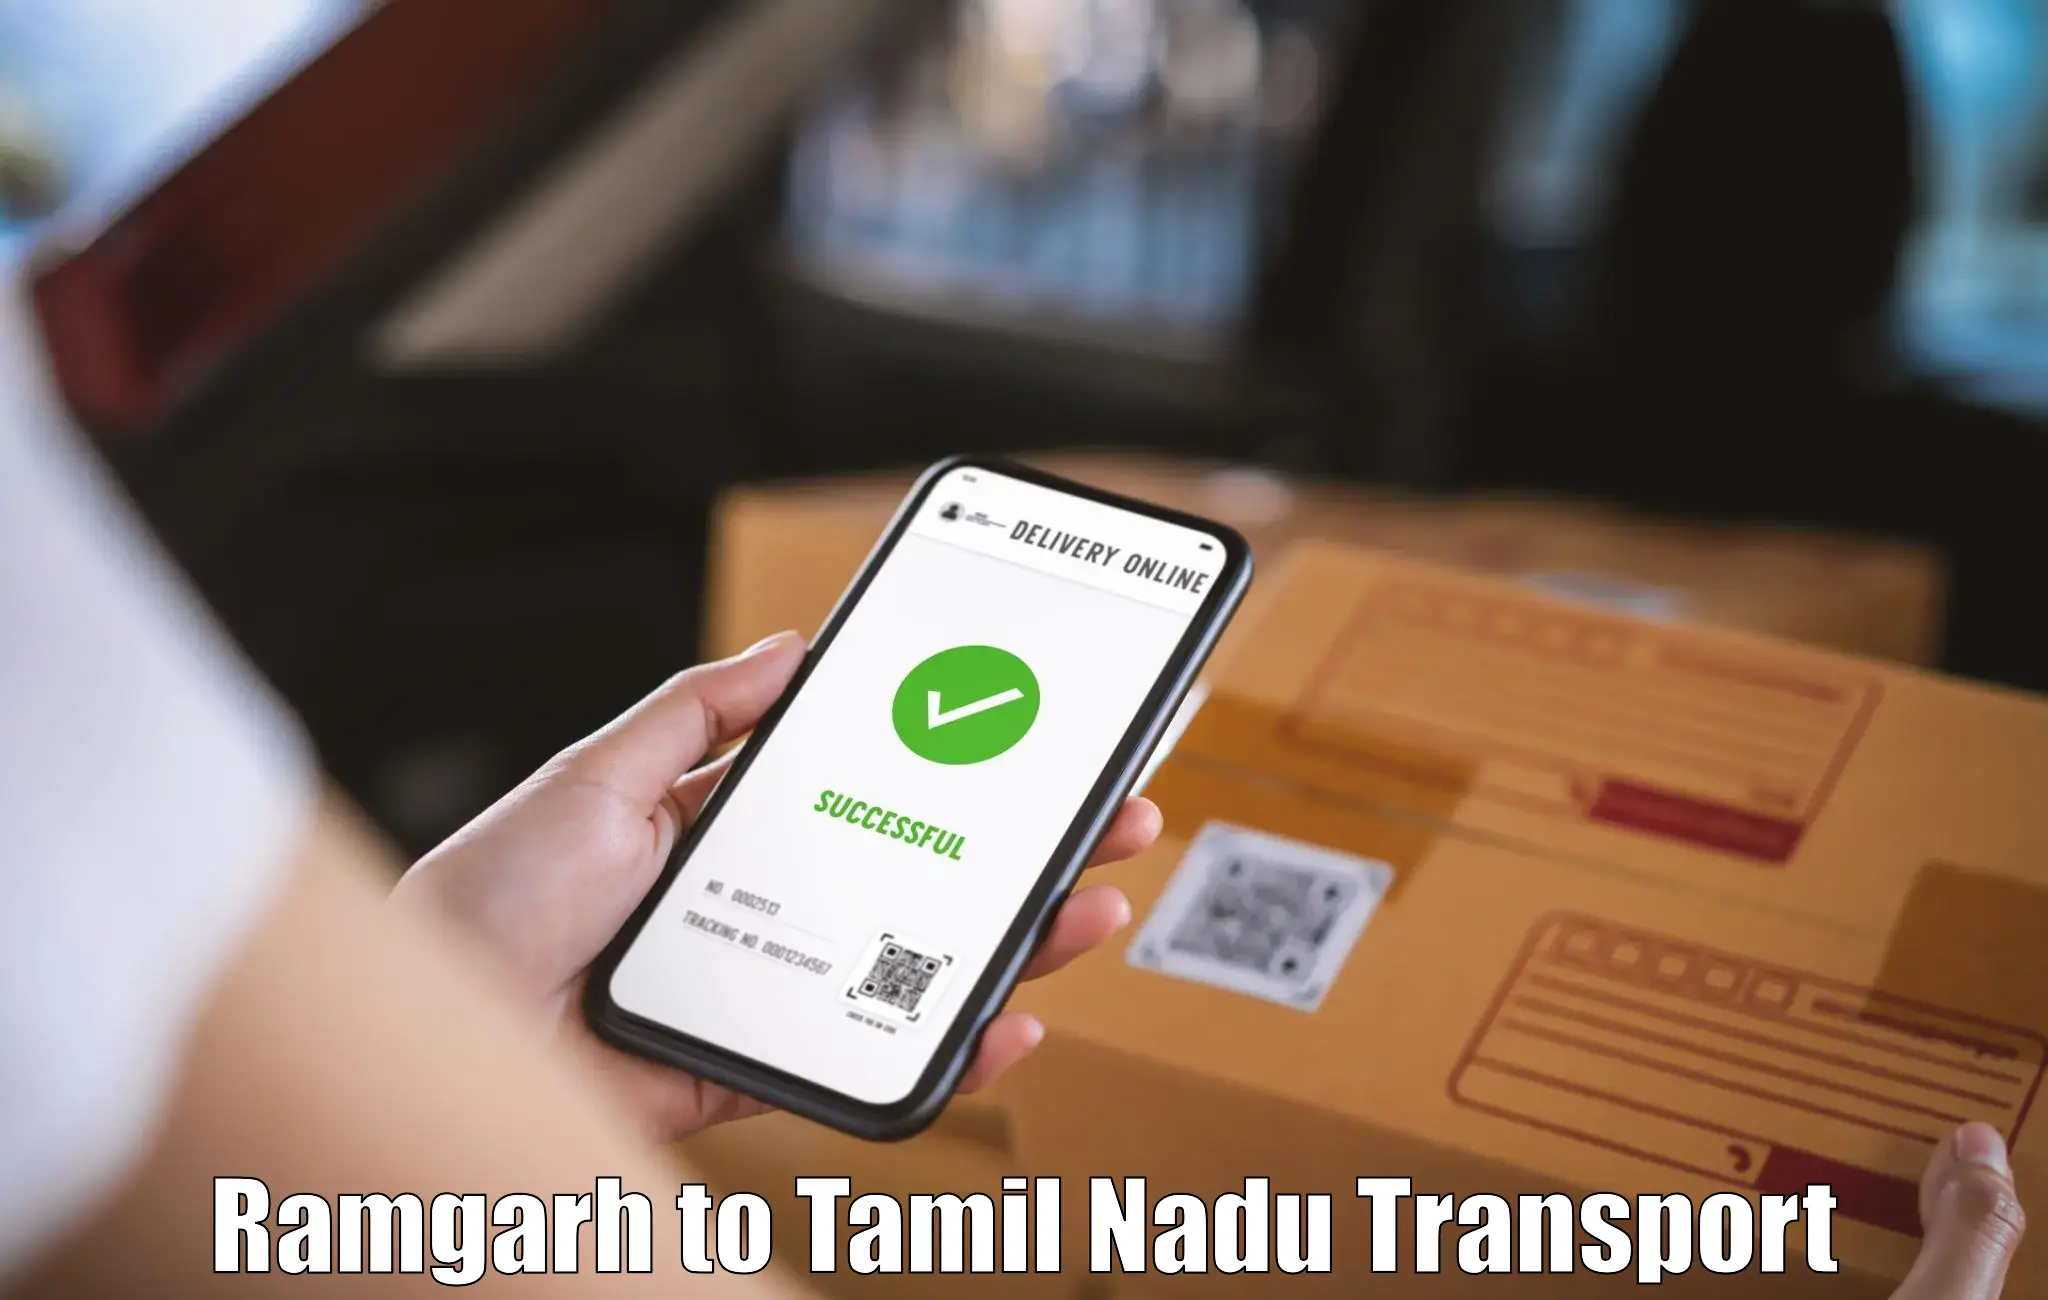 Pick up transport service Ramgarh to The Gandhigram Rural Institute